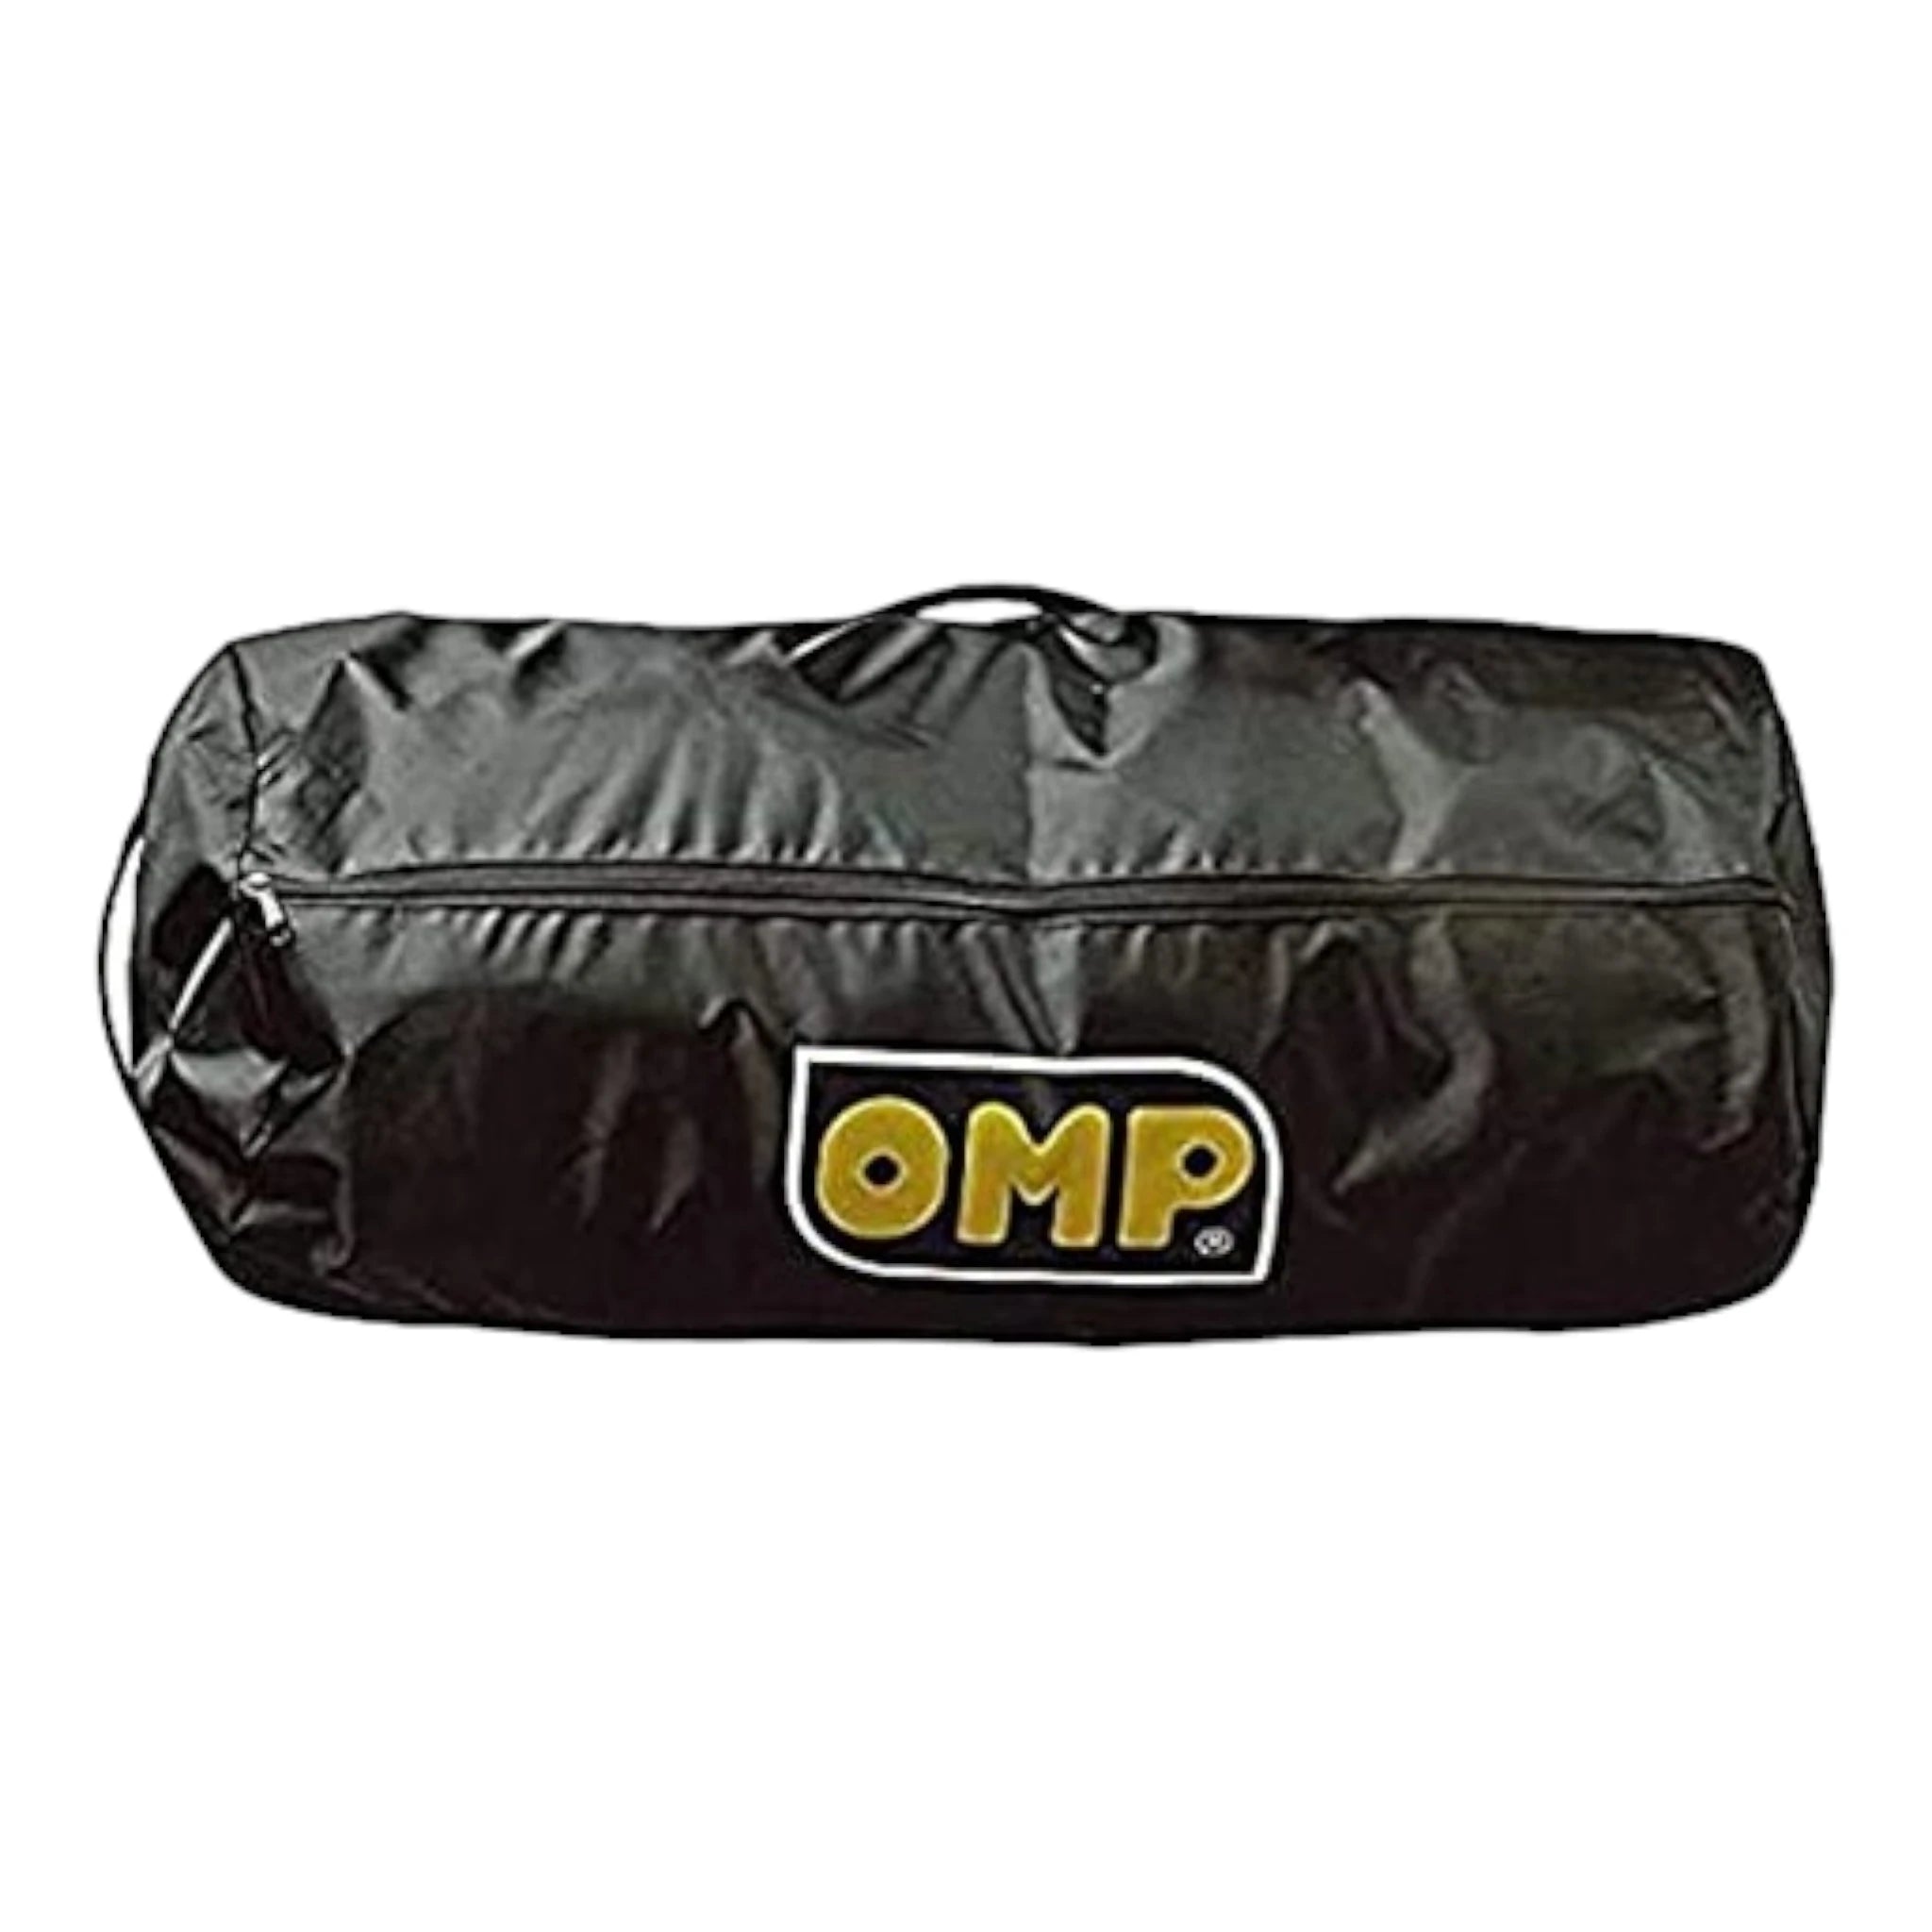 OMP Kart Tyre Bag Black